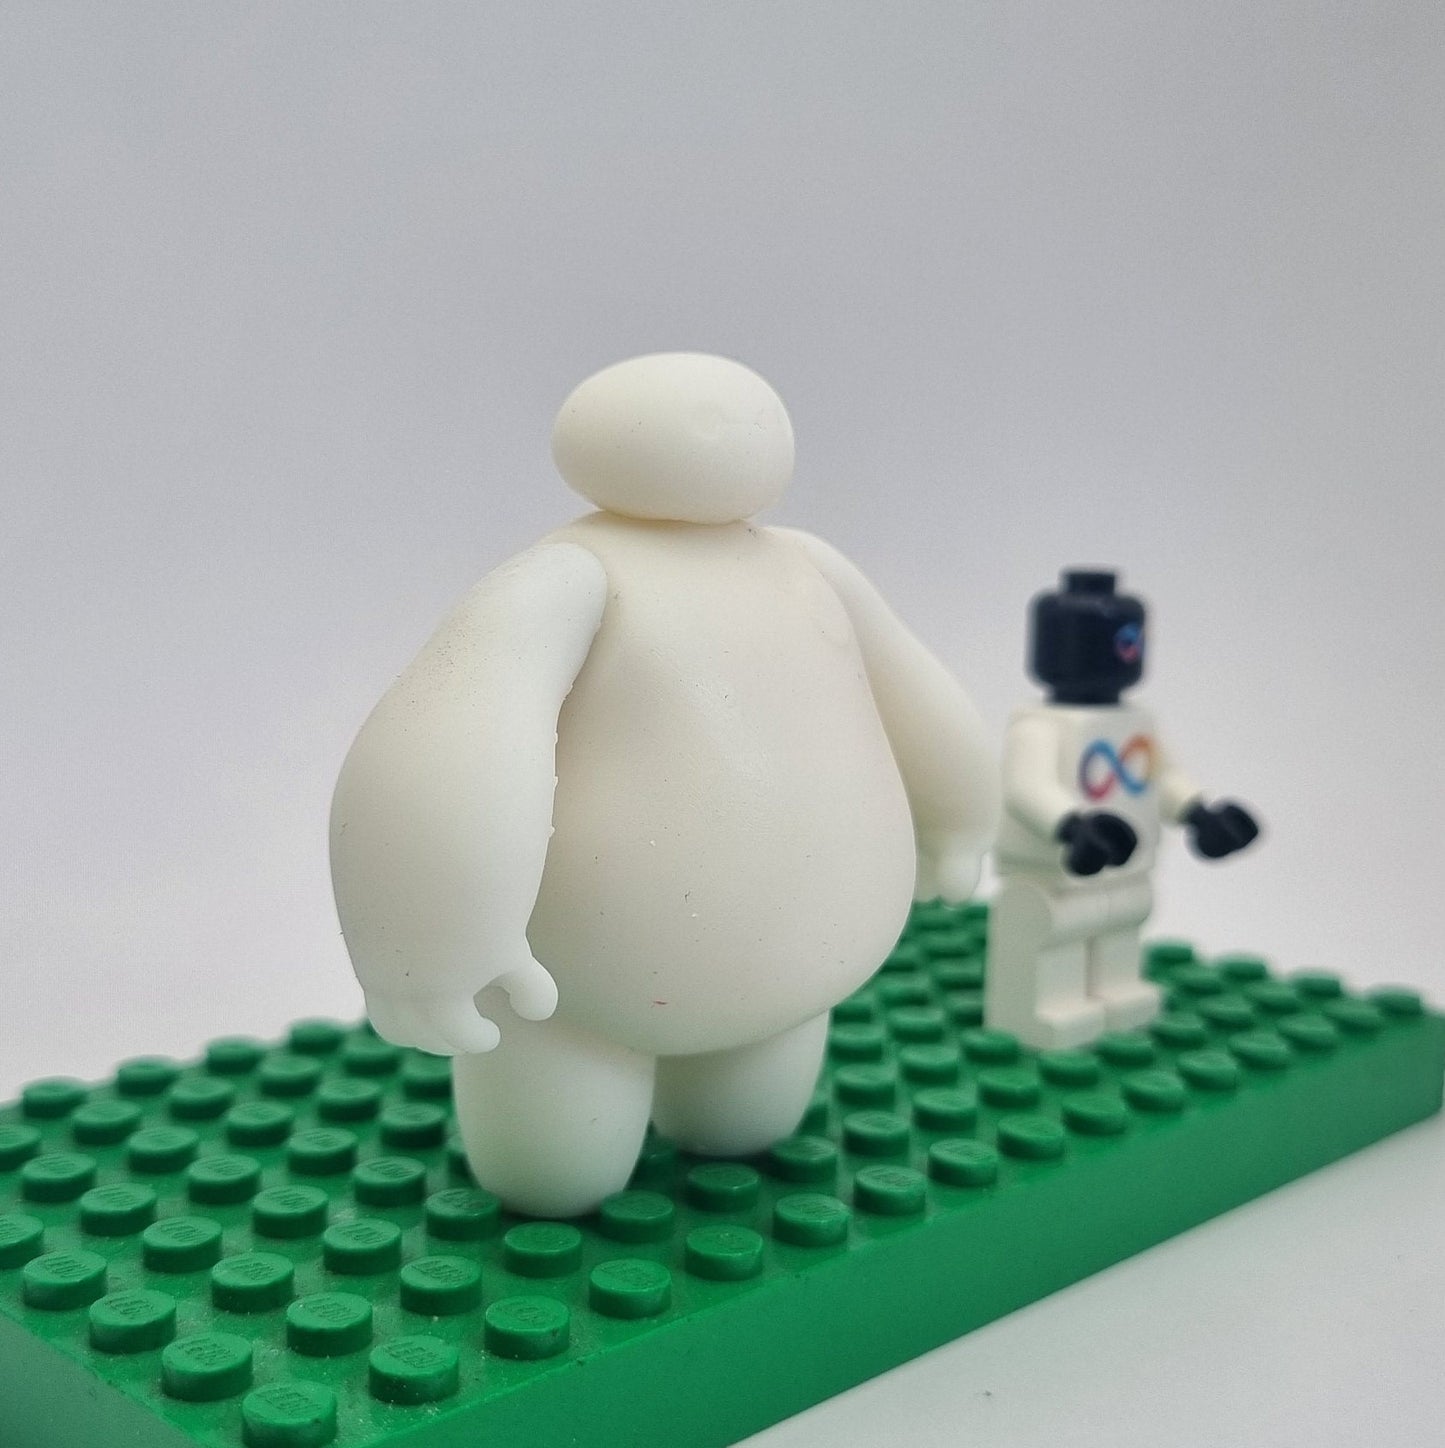 Custom 3D printed building toy big white marshmallow balloon character bigfig!